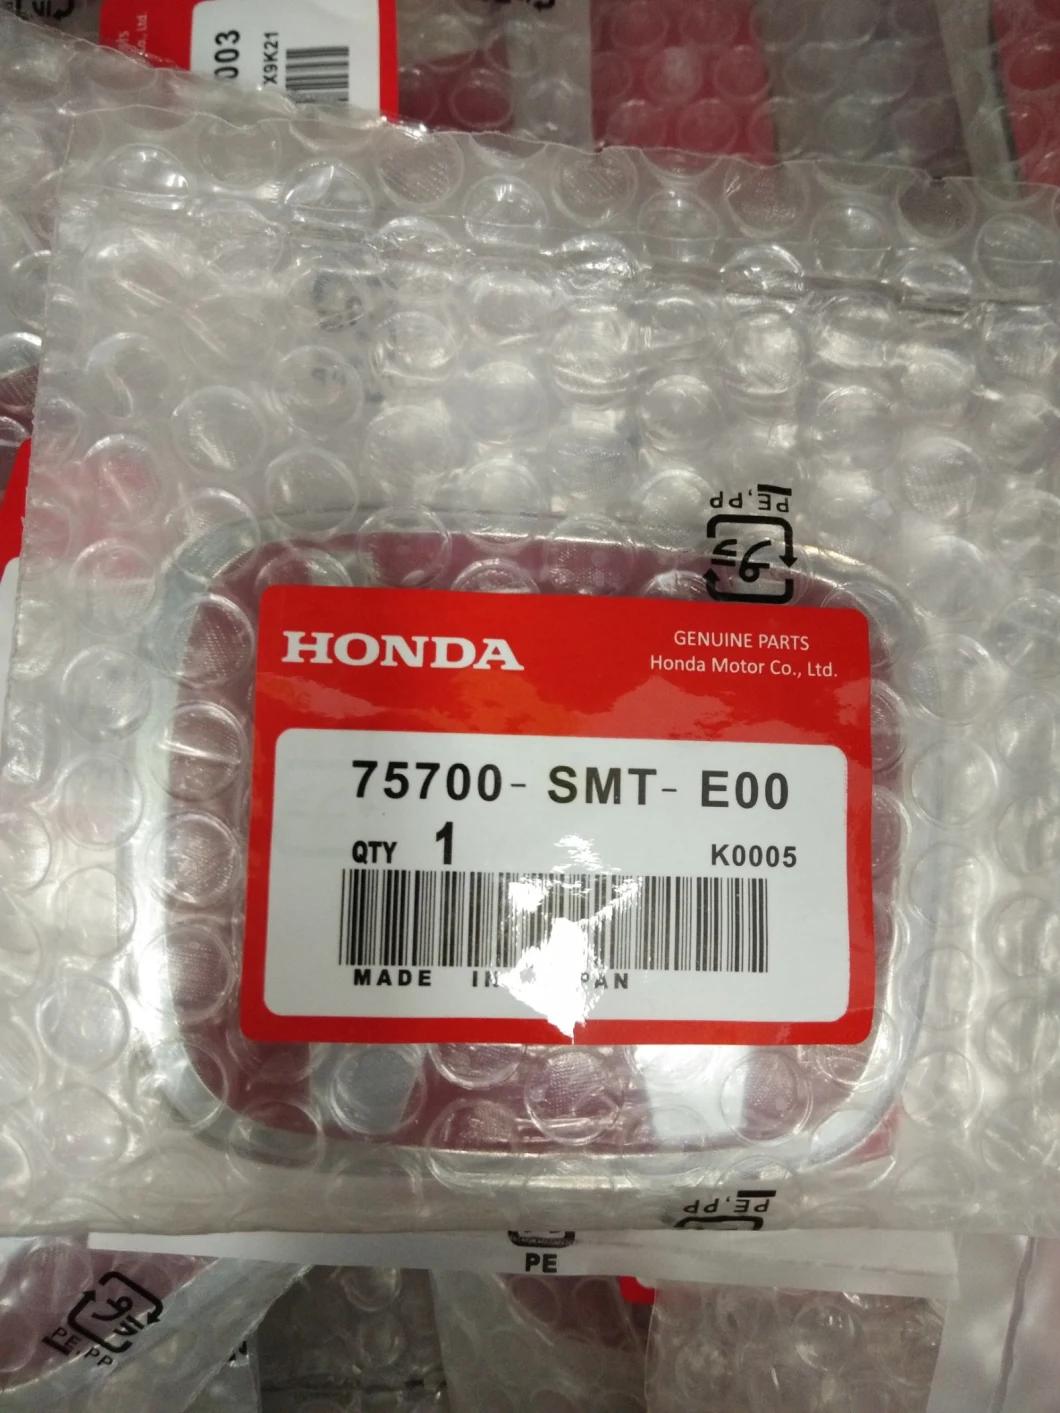 Honda Red Emblem Sticker Front Rear Car Emblem